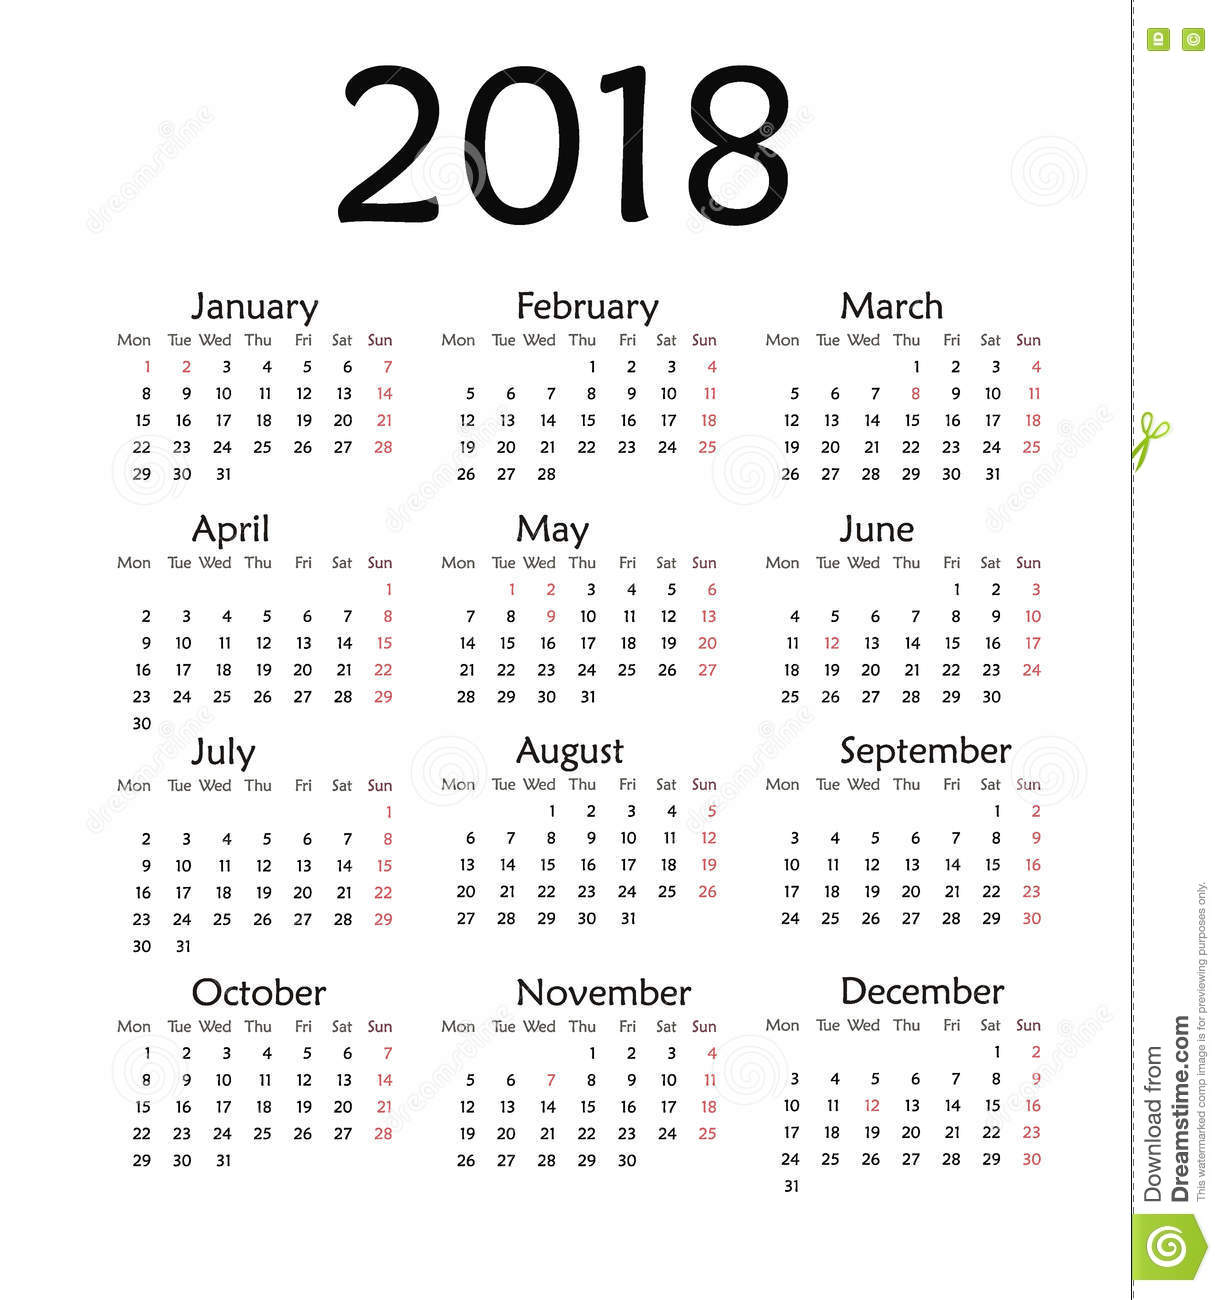 2018 calendar free download